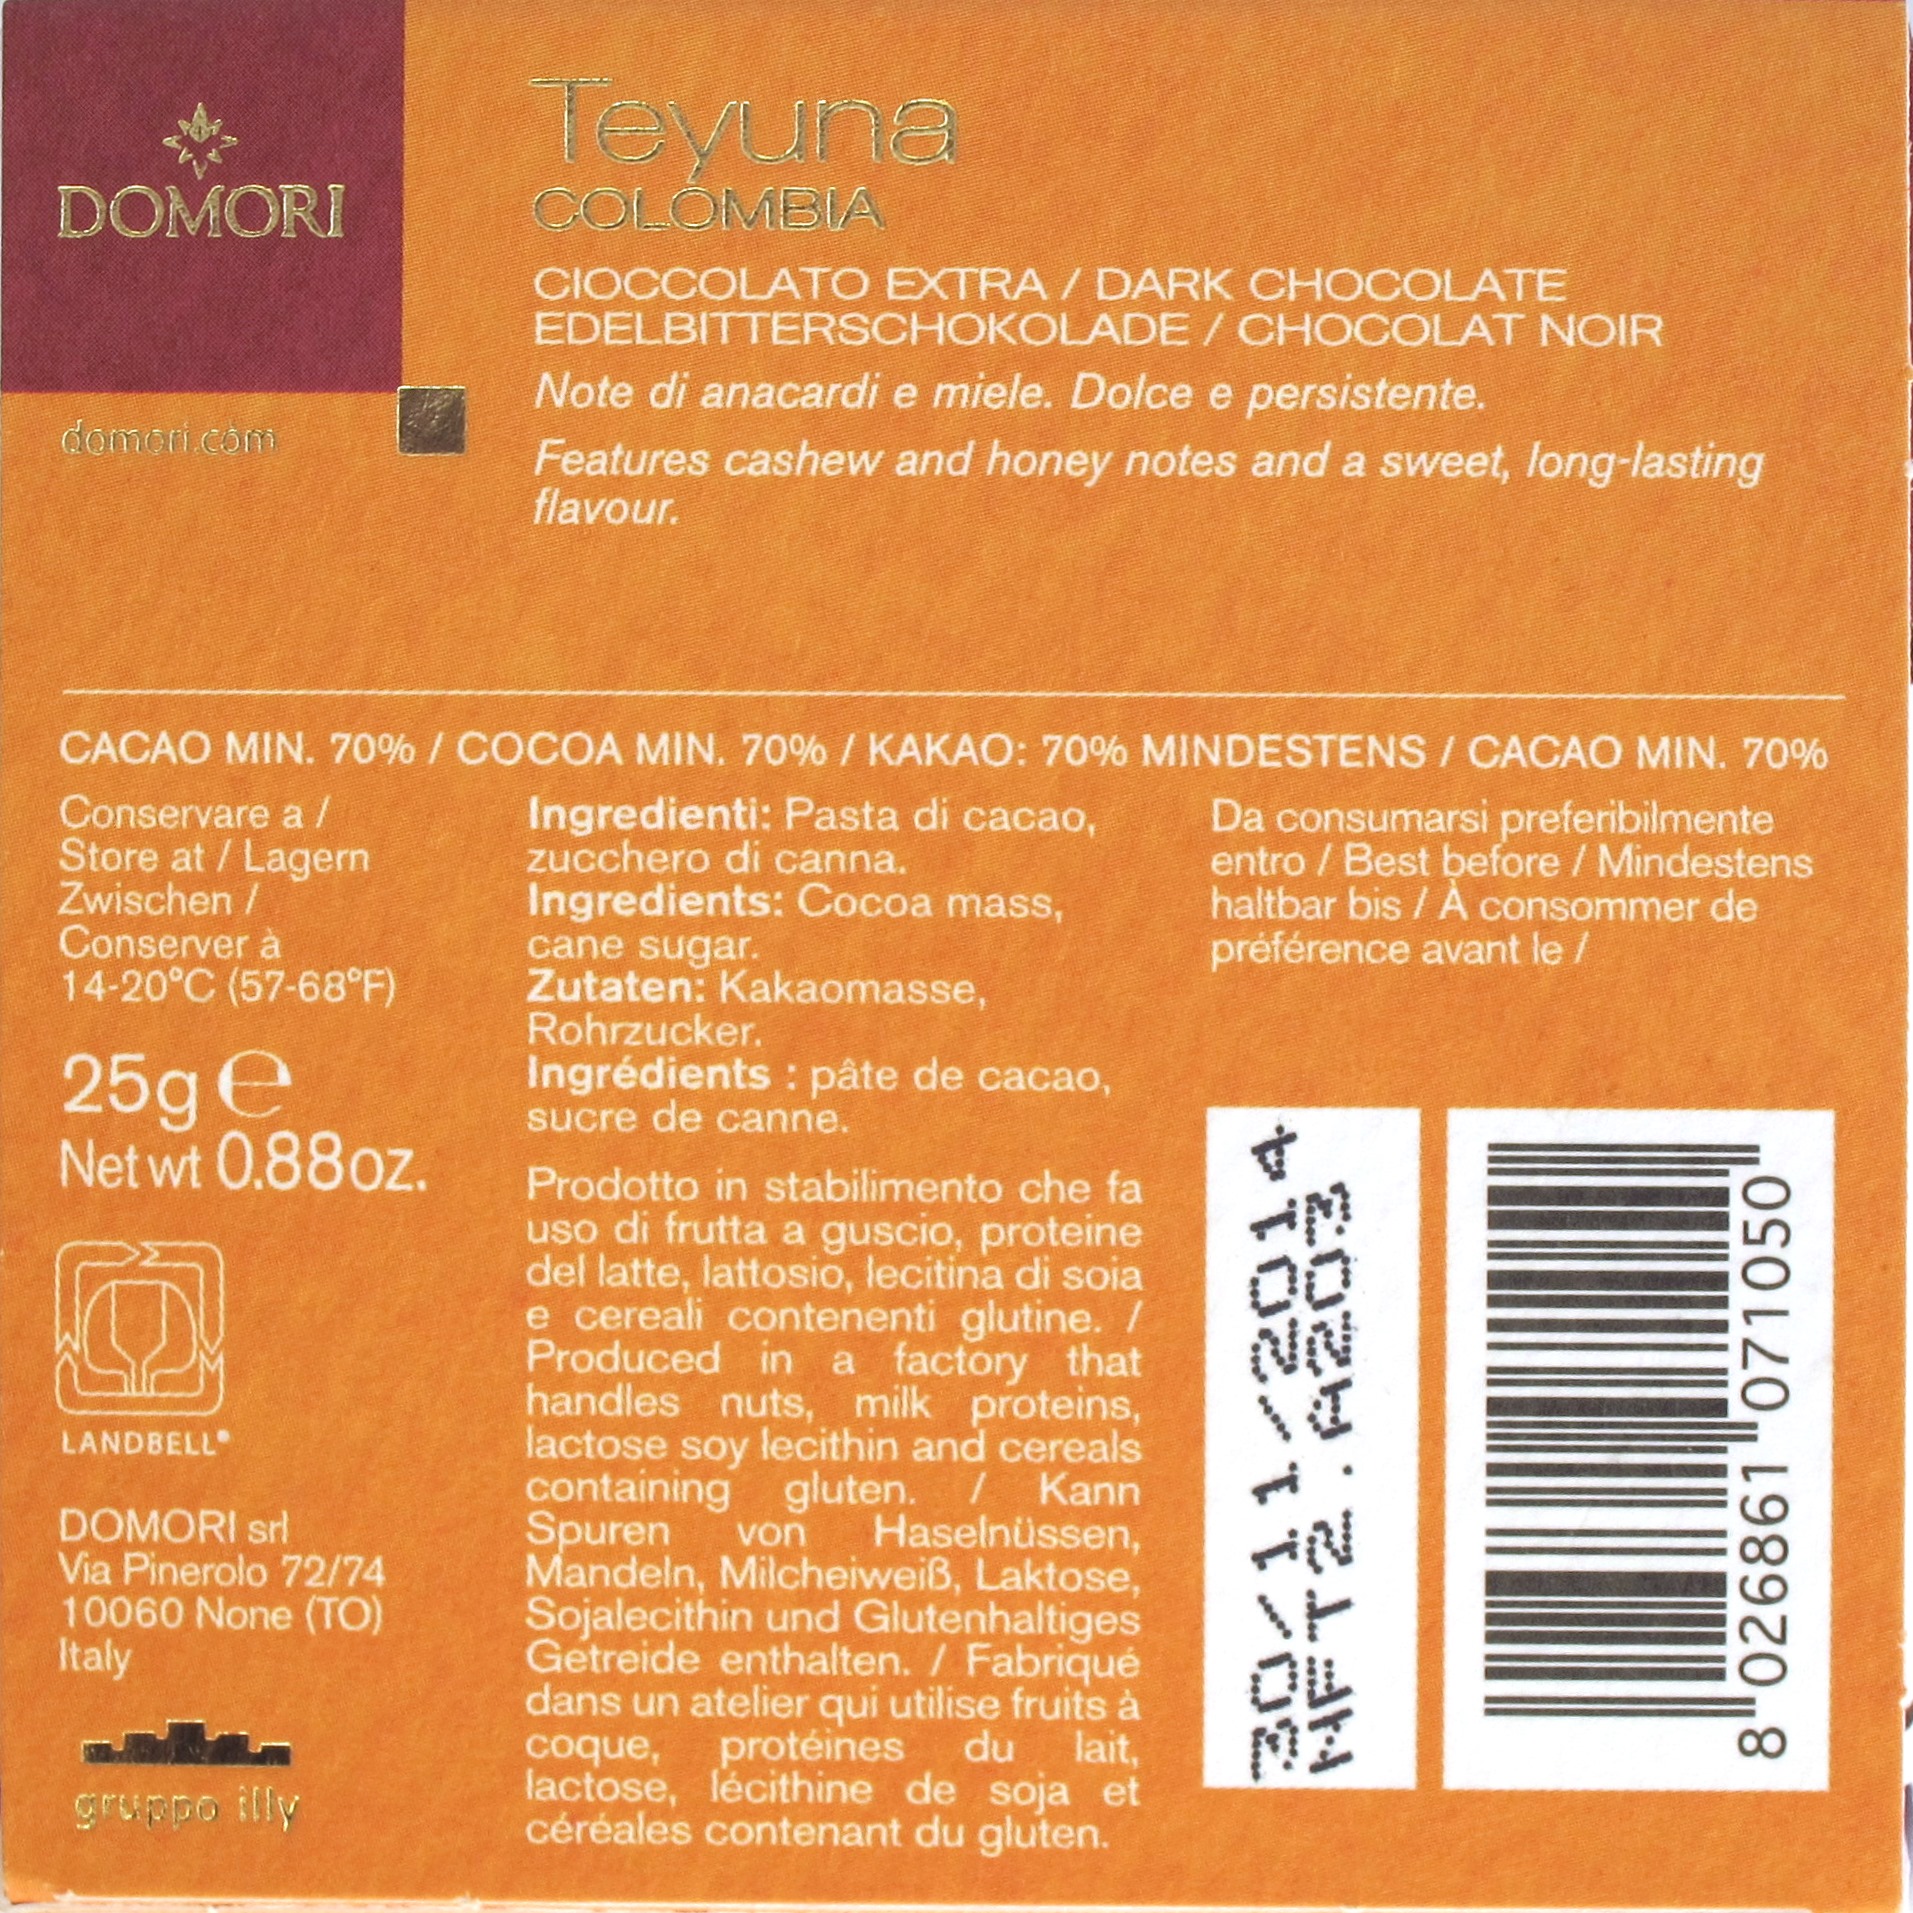 Domori Kolumbien-Bitterschokolade "Teyuna", Inhaltsangaben